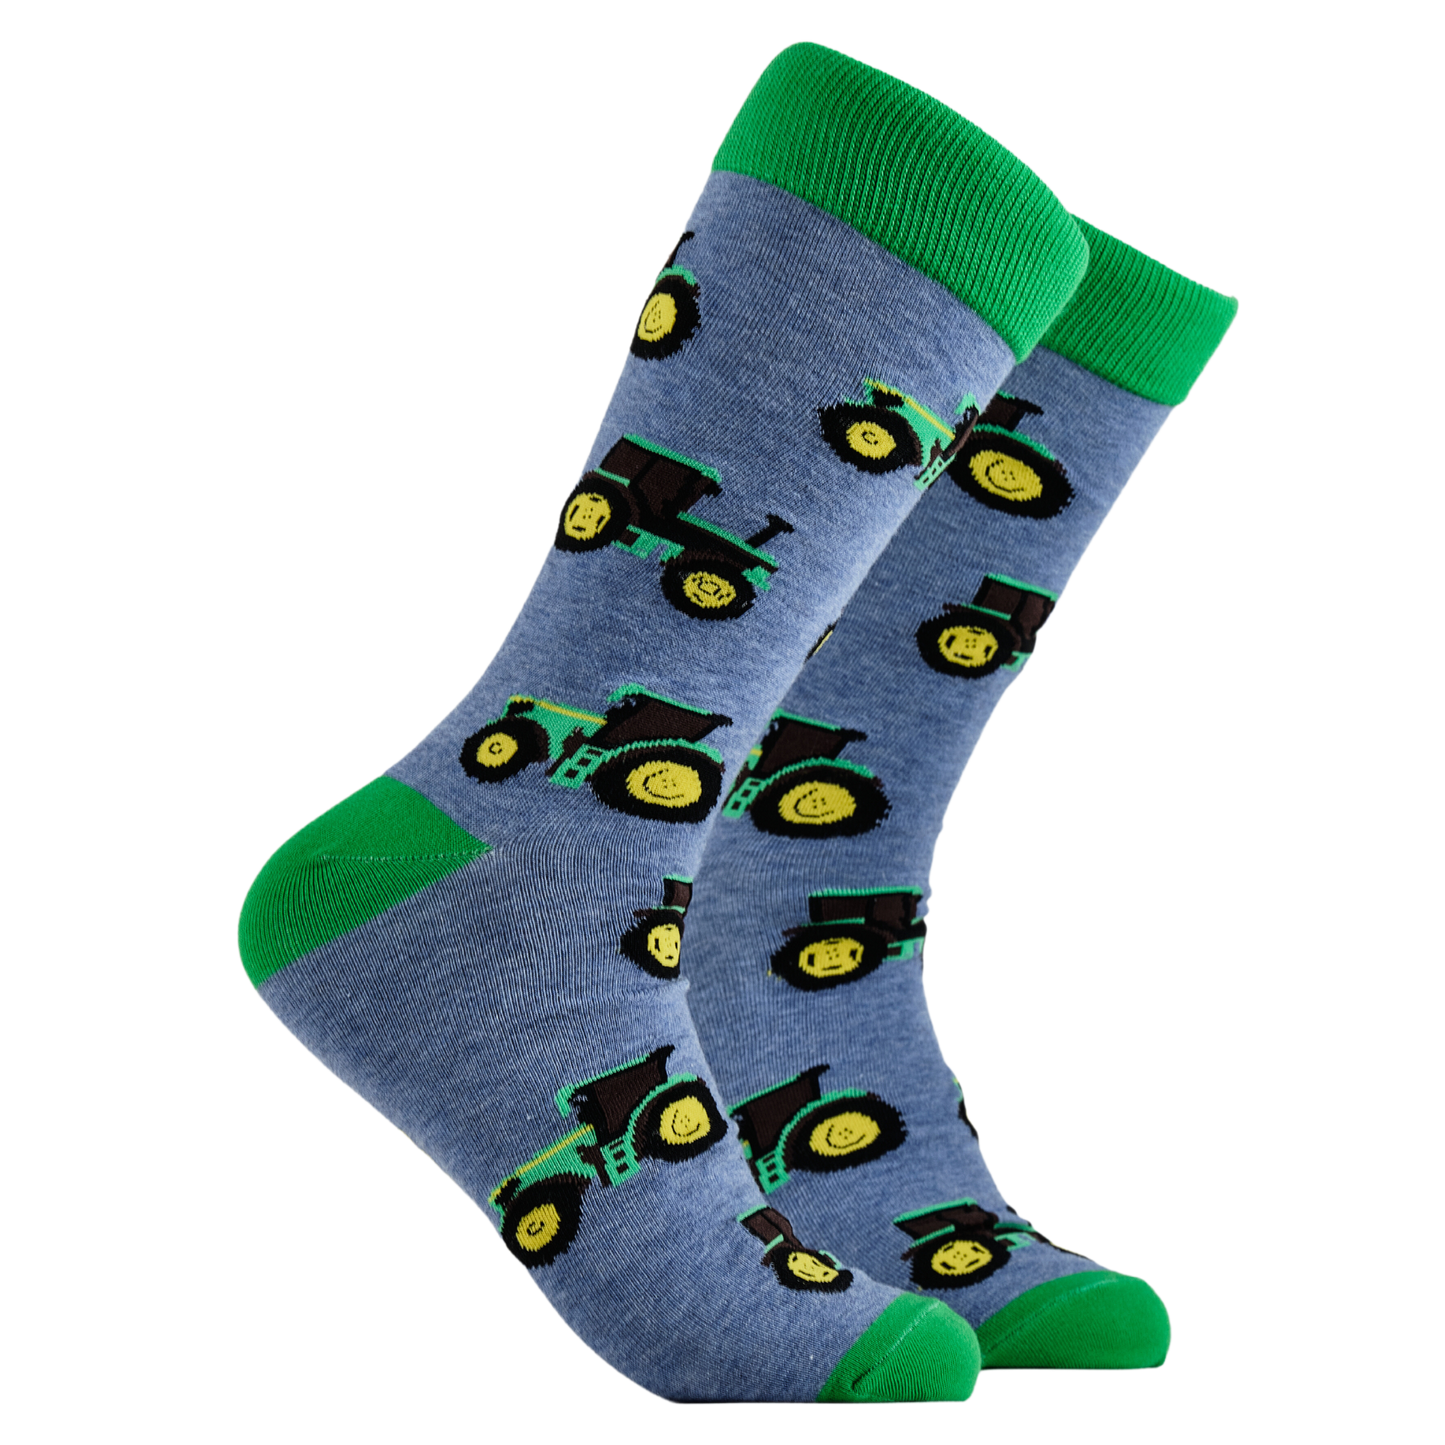 Farming Socks - Green Machine. A pair of socks depicting green tractors. Blue legs, green cuff, heel and toe.